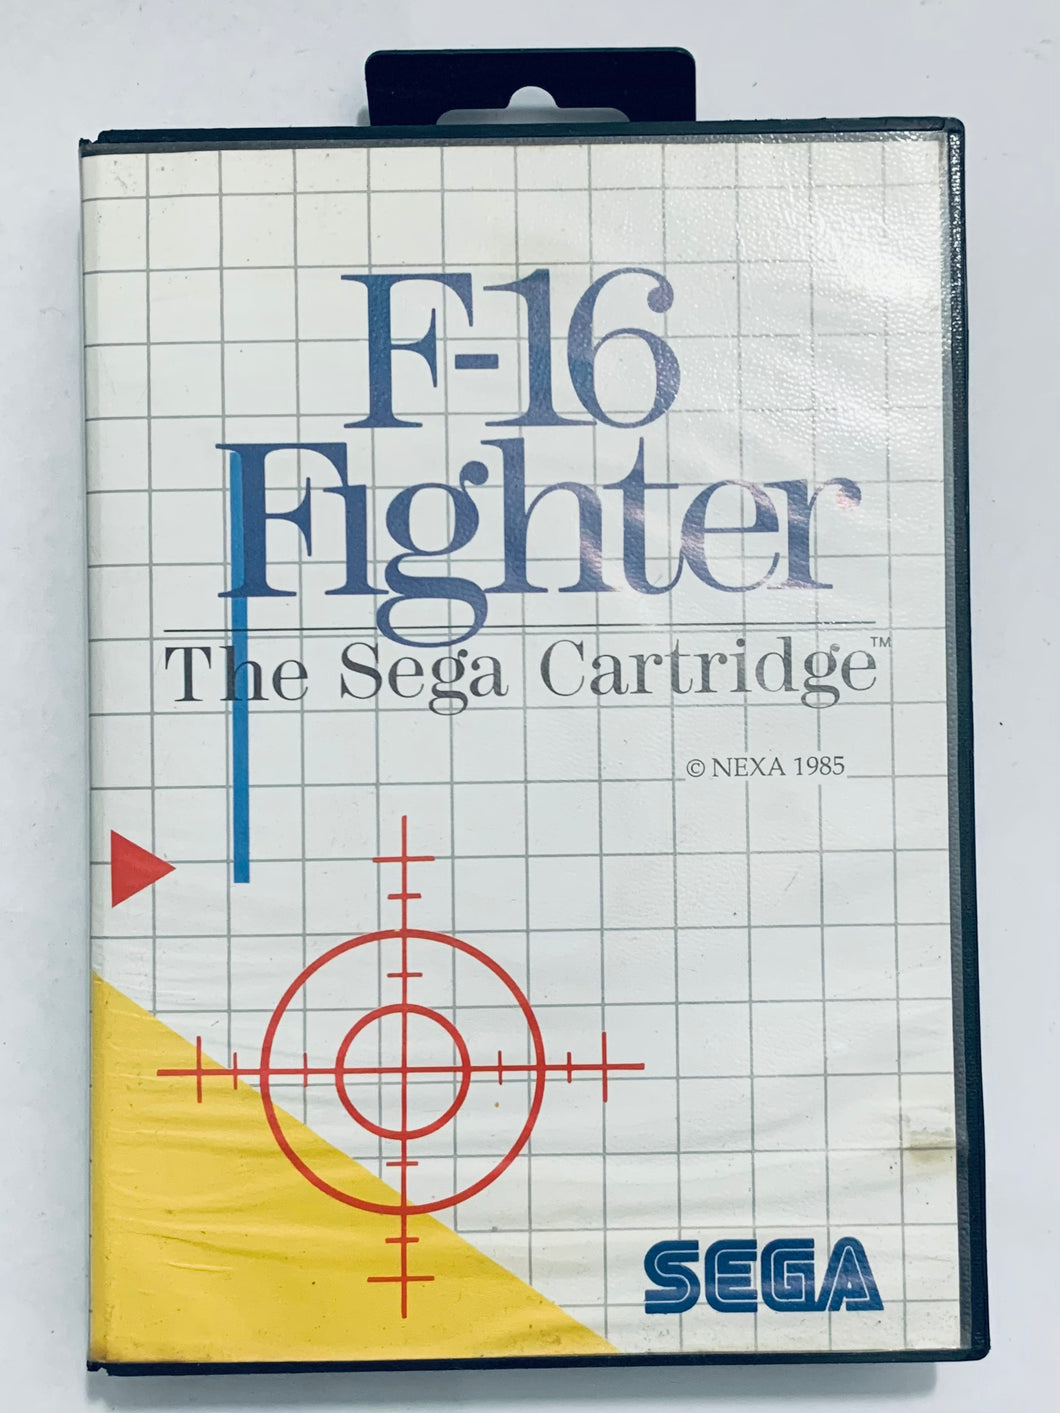 F-16 Fighter (The Sega Cartridge) - Sega Master System - SMS - PAL - CIB (4581)